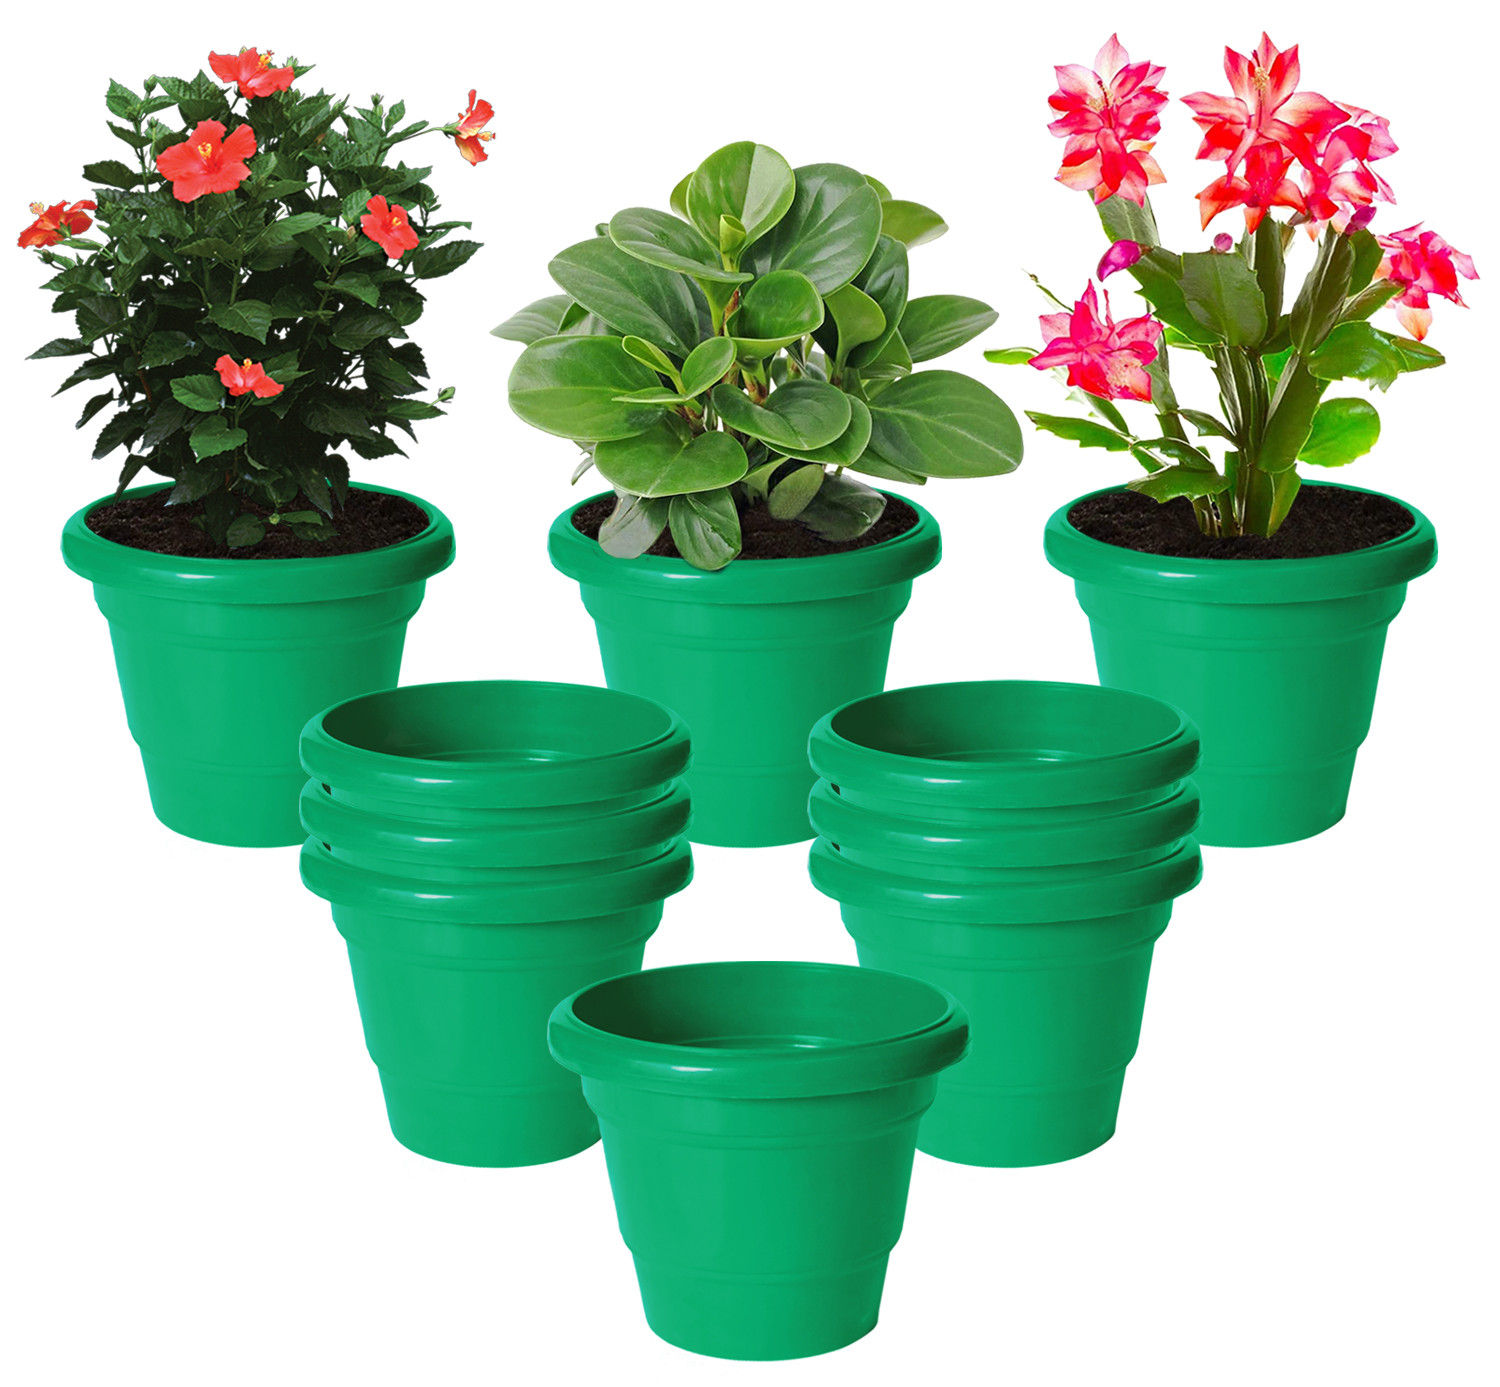 Kuber Industries Solid 2 Layered Plastic Flower Pot|Gamla For Home Decor,Nursery,Balcony,Garden,8